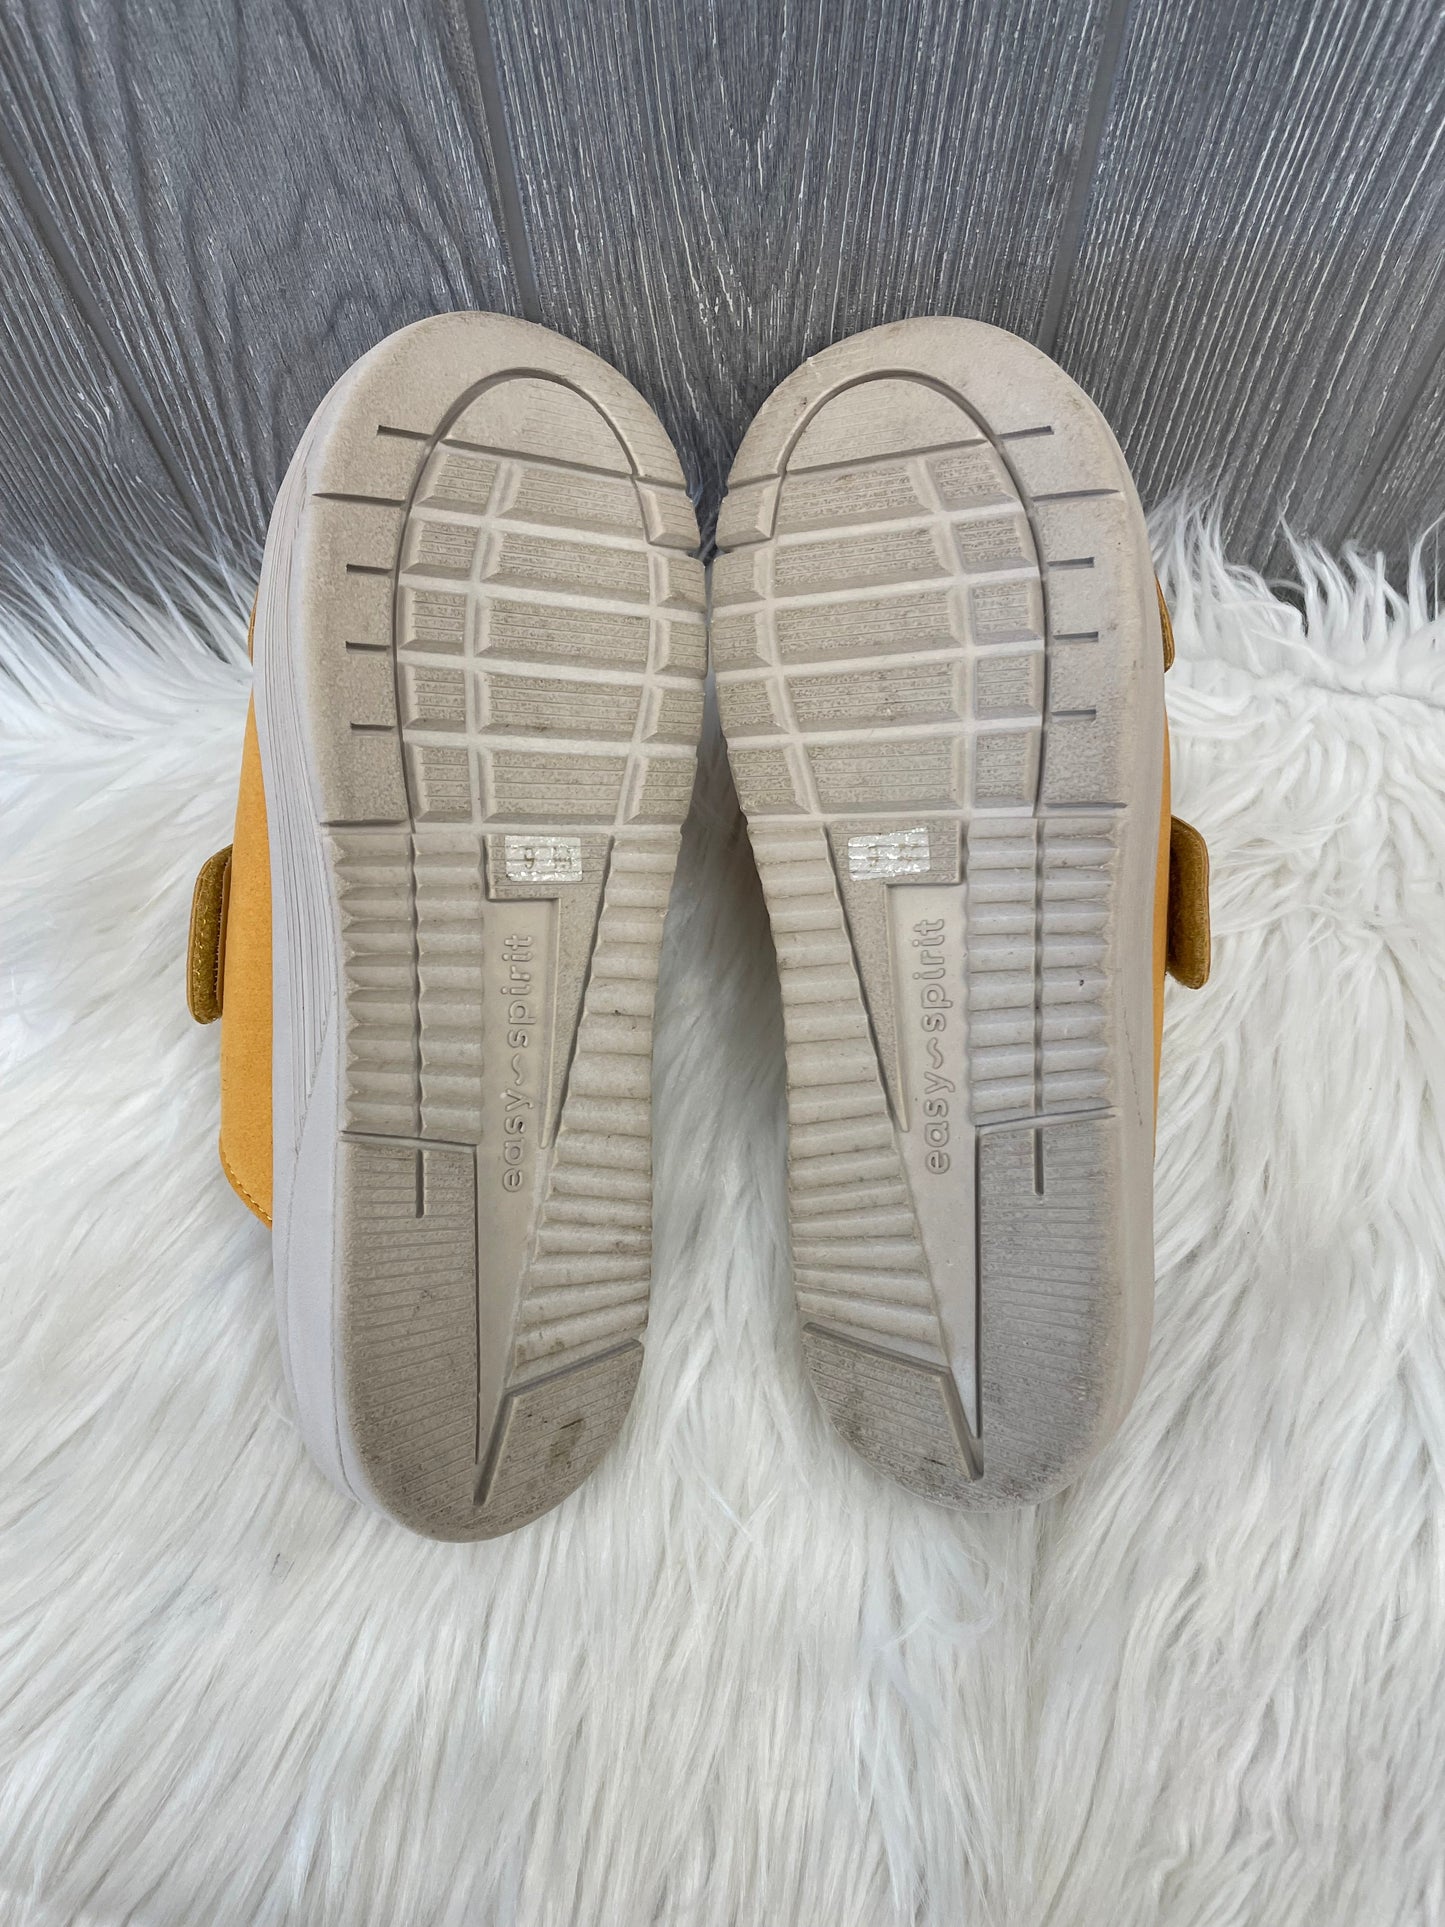 Yellow Sandals Flats Easy Spirit, Size 9